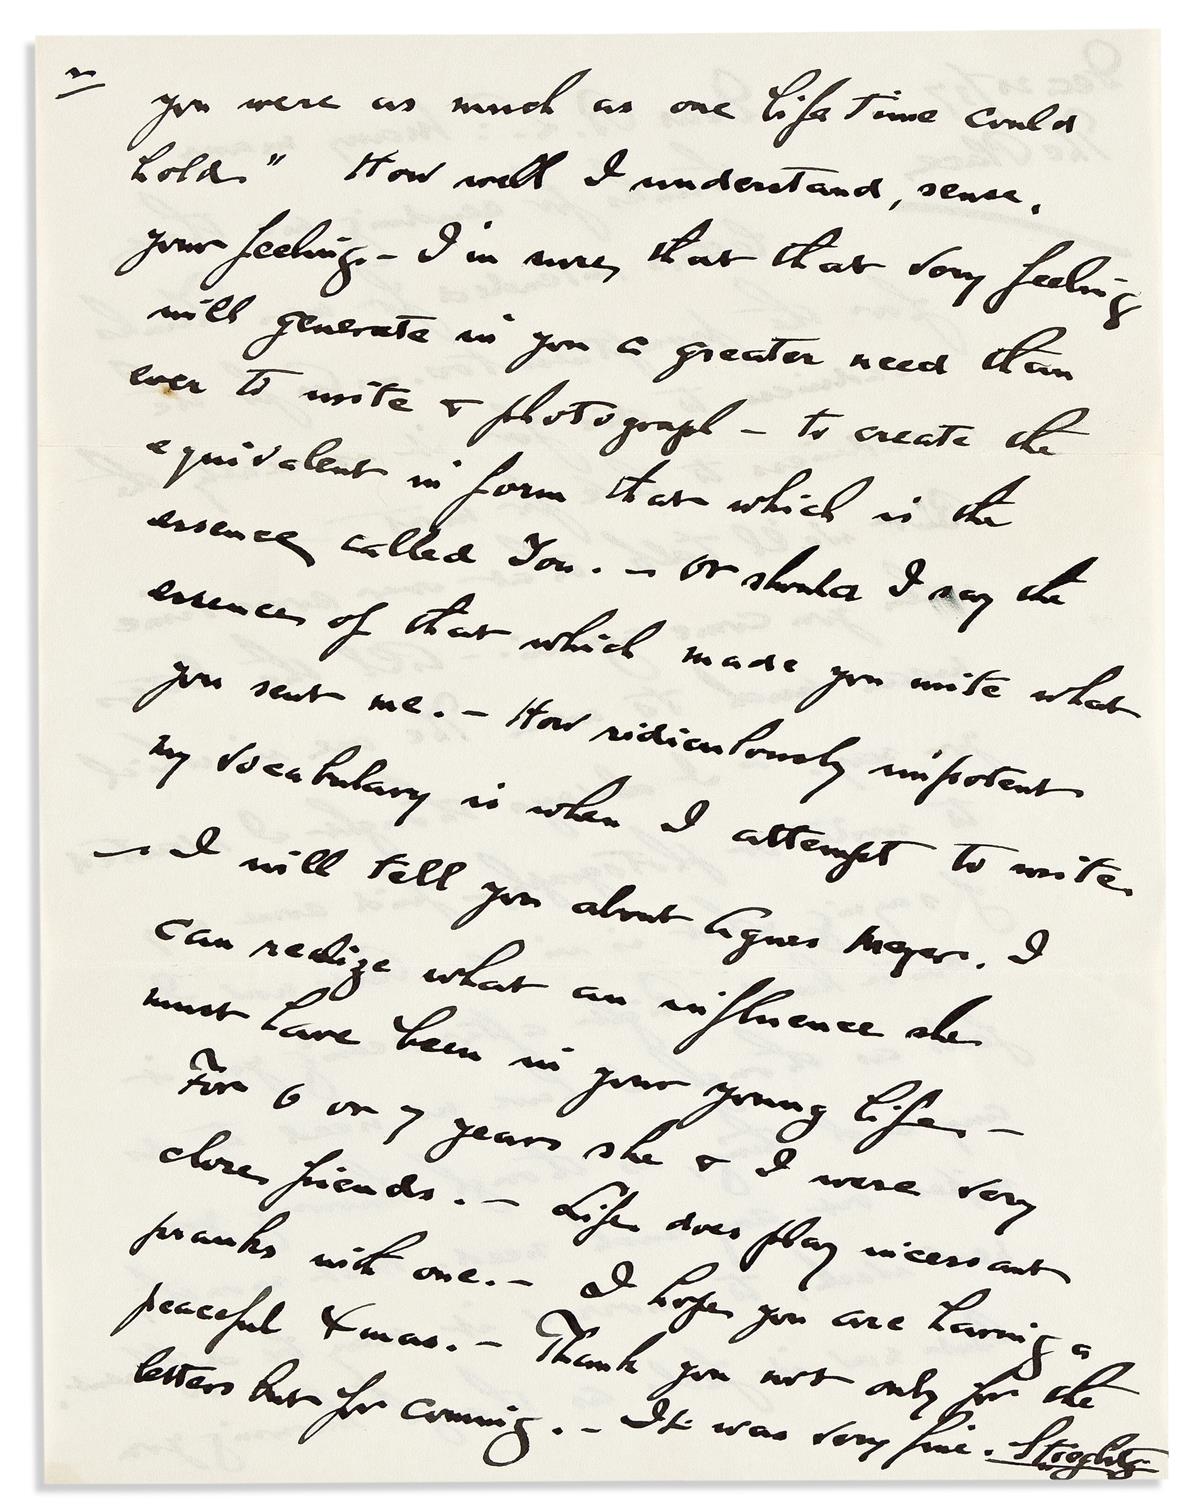 STIEGLITZ, ALFRED. Autograph Letter Signed, Stieglitz, to the wife of Horace Rand Lamb (Dear B[eatrice] L[amb],